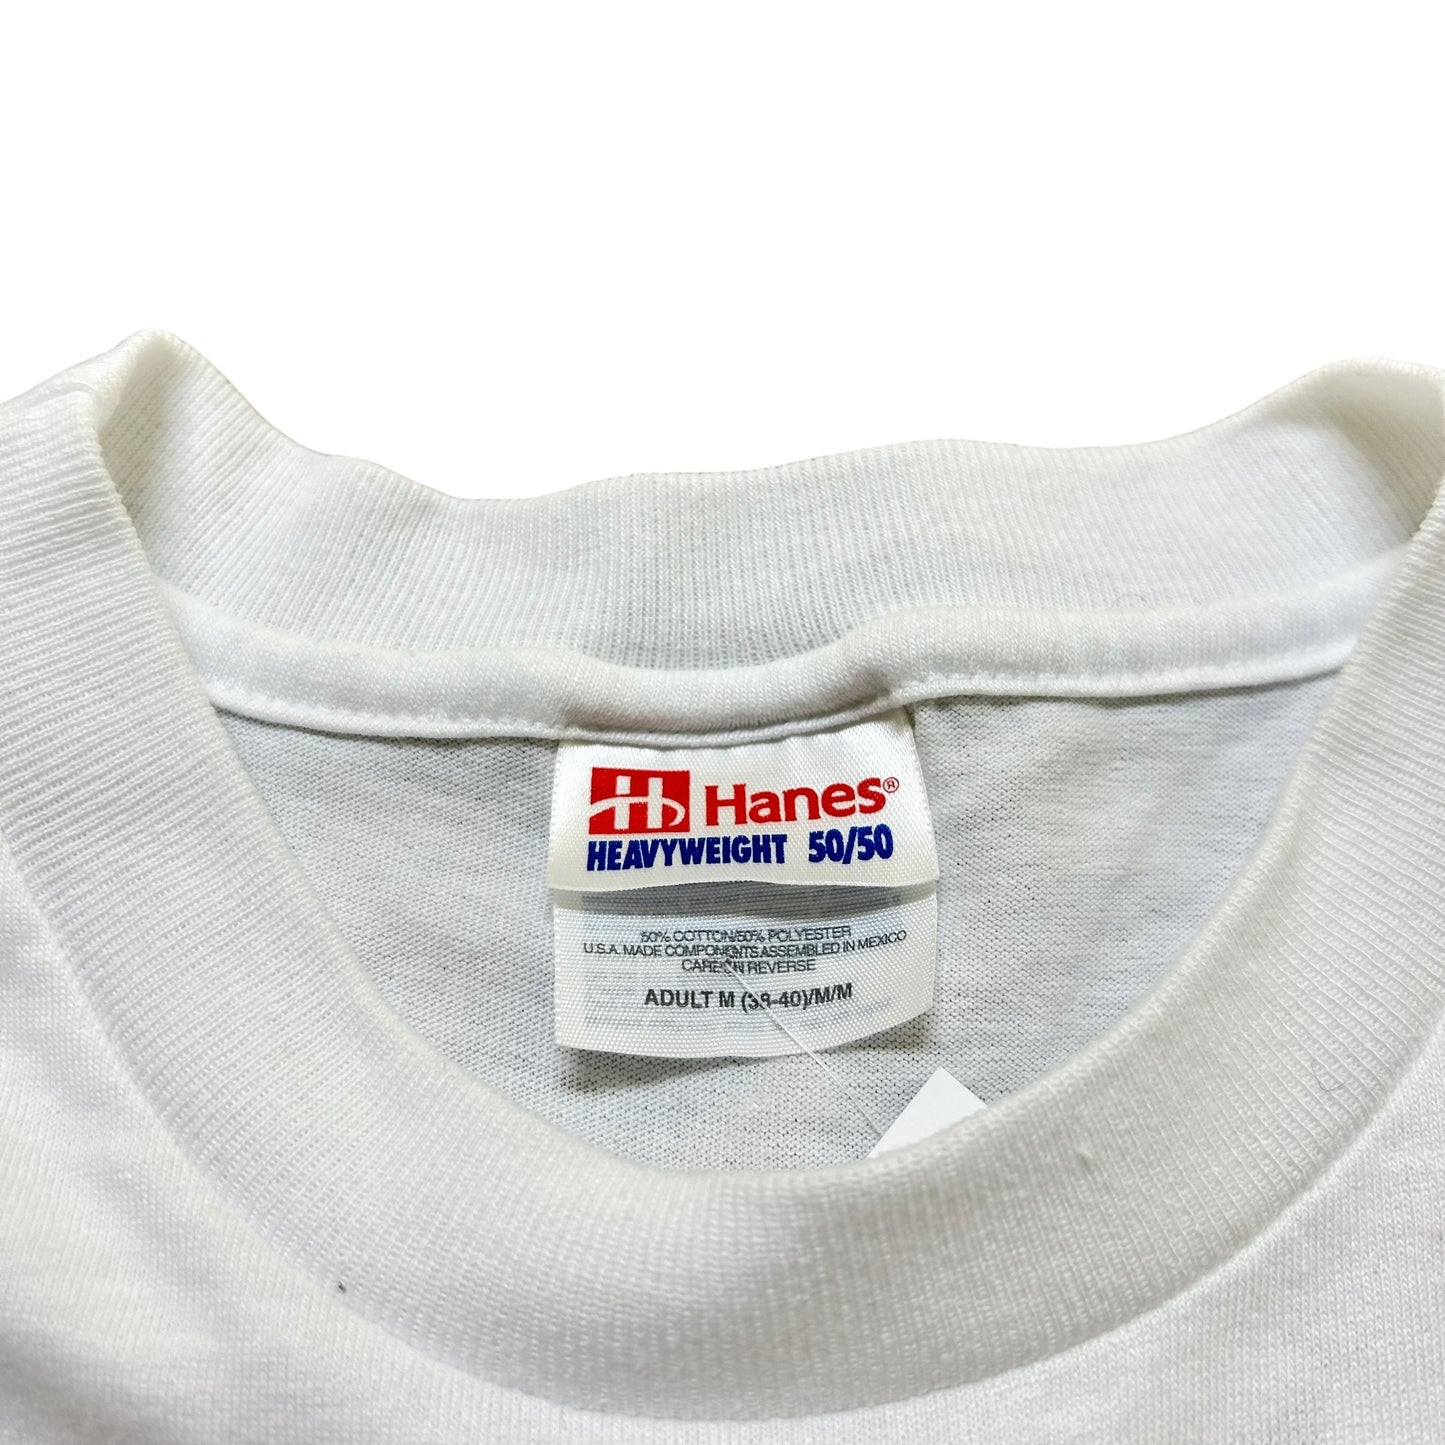 Vintage 1990s “Super Mario” Monte Carlo Racing White Graphic T-Shirt - Size Medium